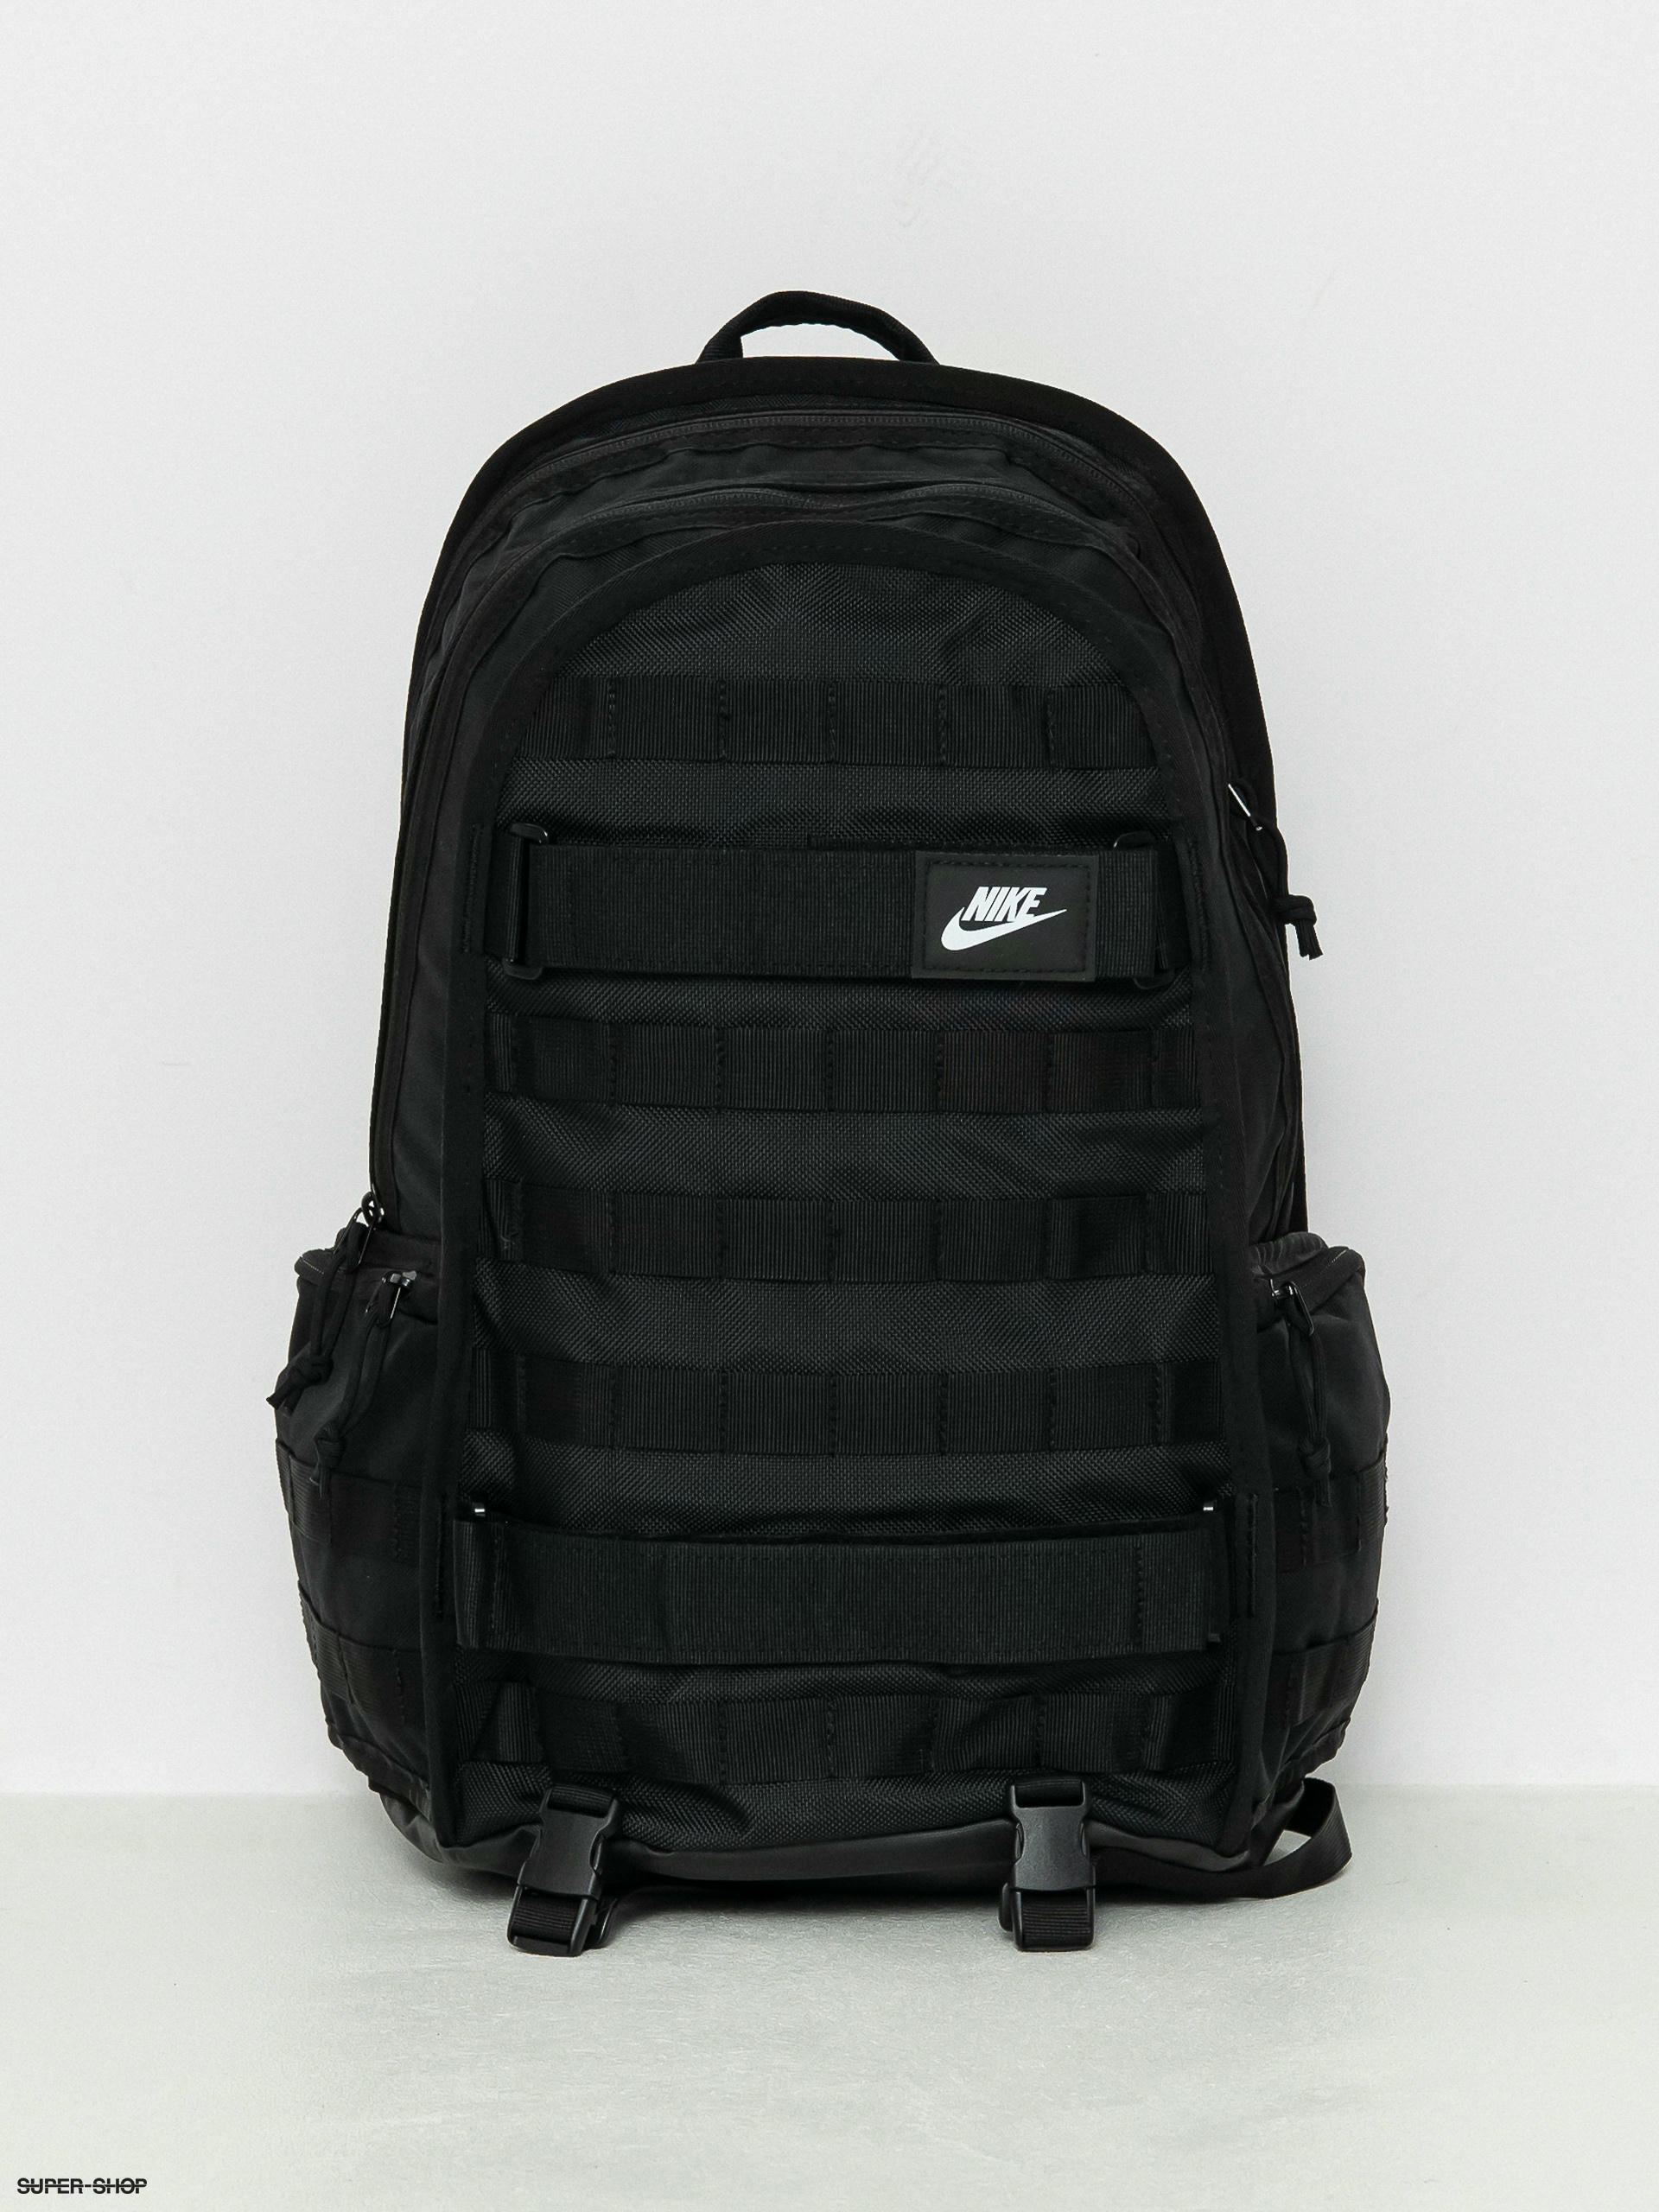 Nike Sportswear RPM (26L) Backpack Limestone/Black/Anthracite - SS22 - US